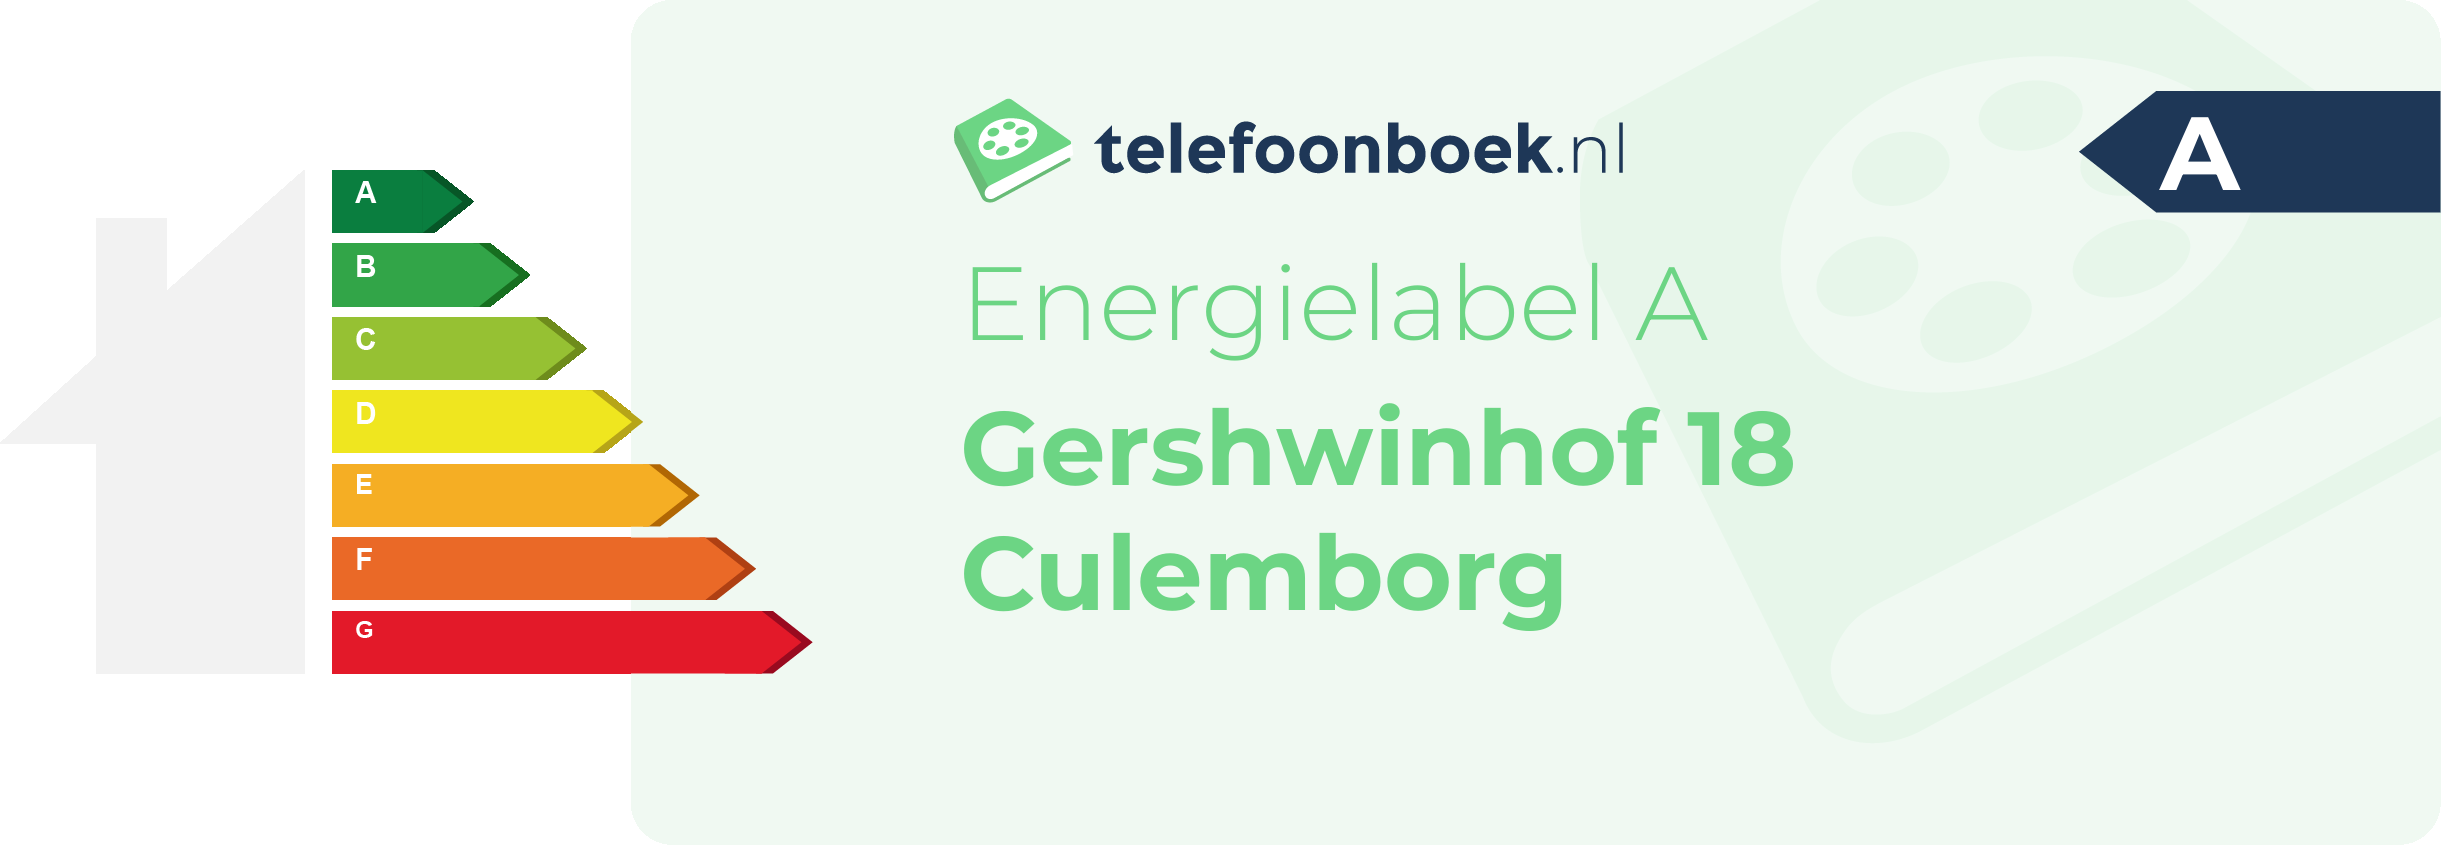 Energielabel Gershwinhof 18 Culemborg